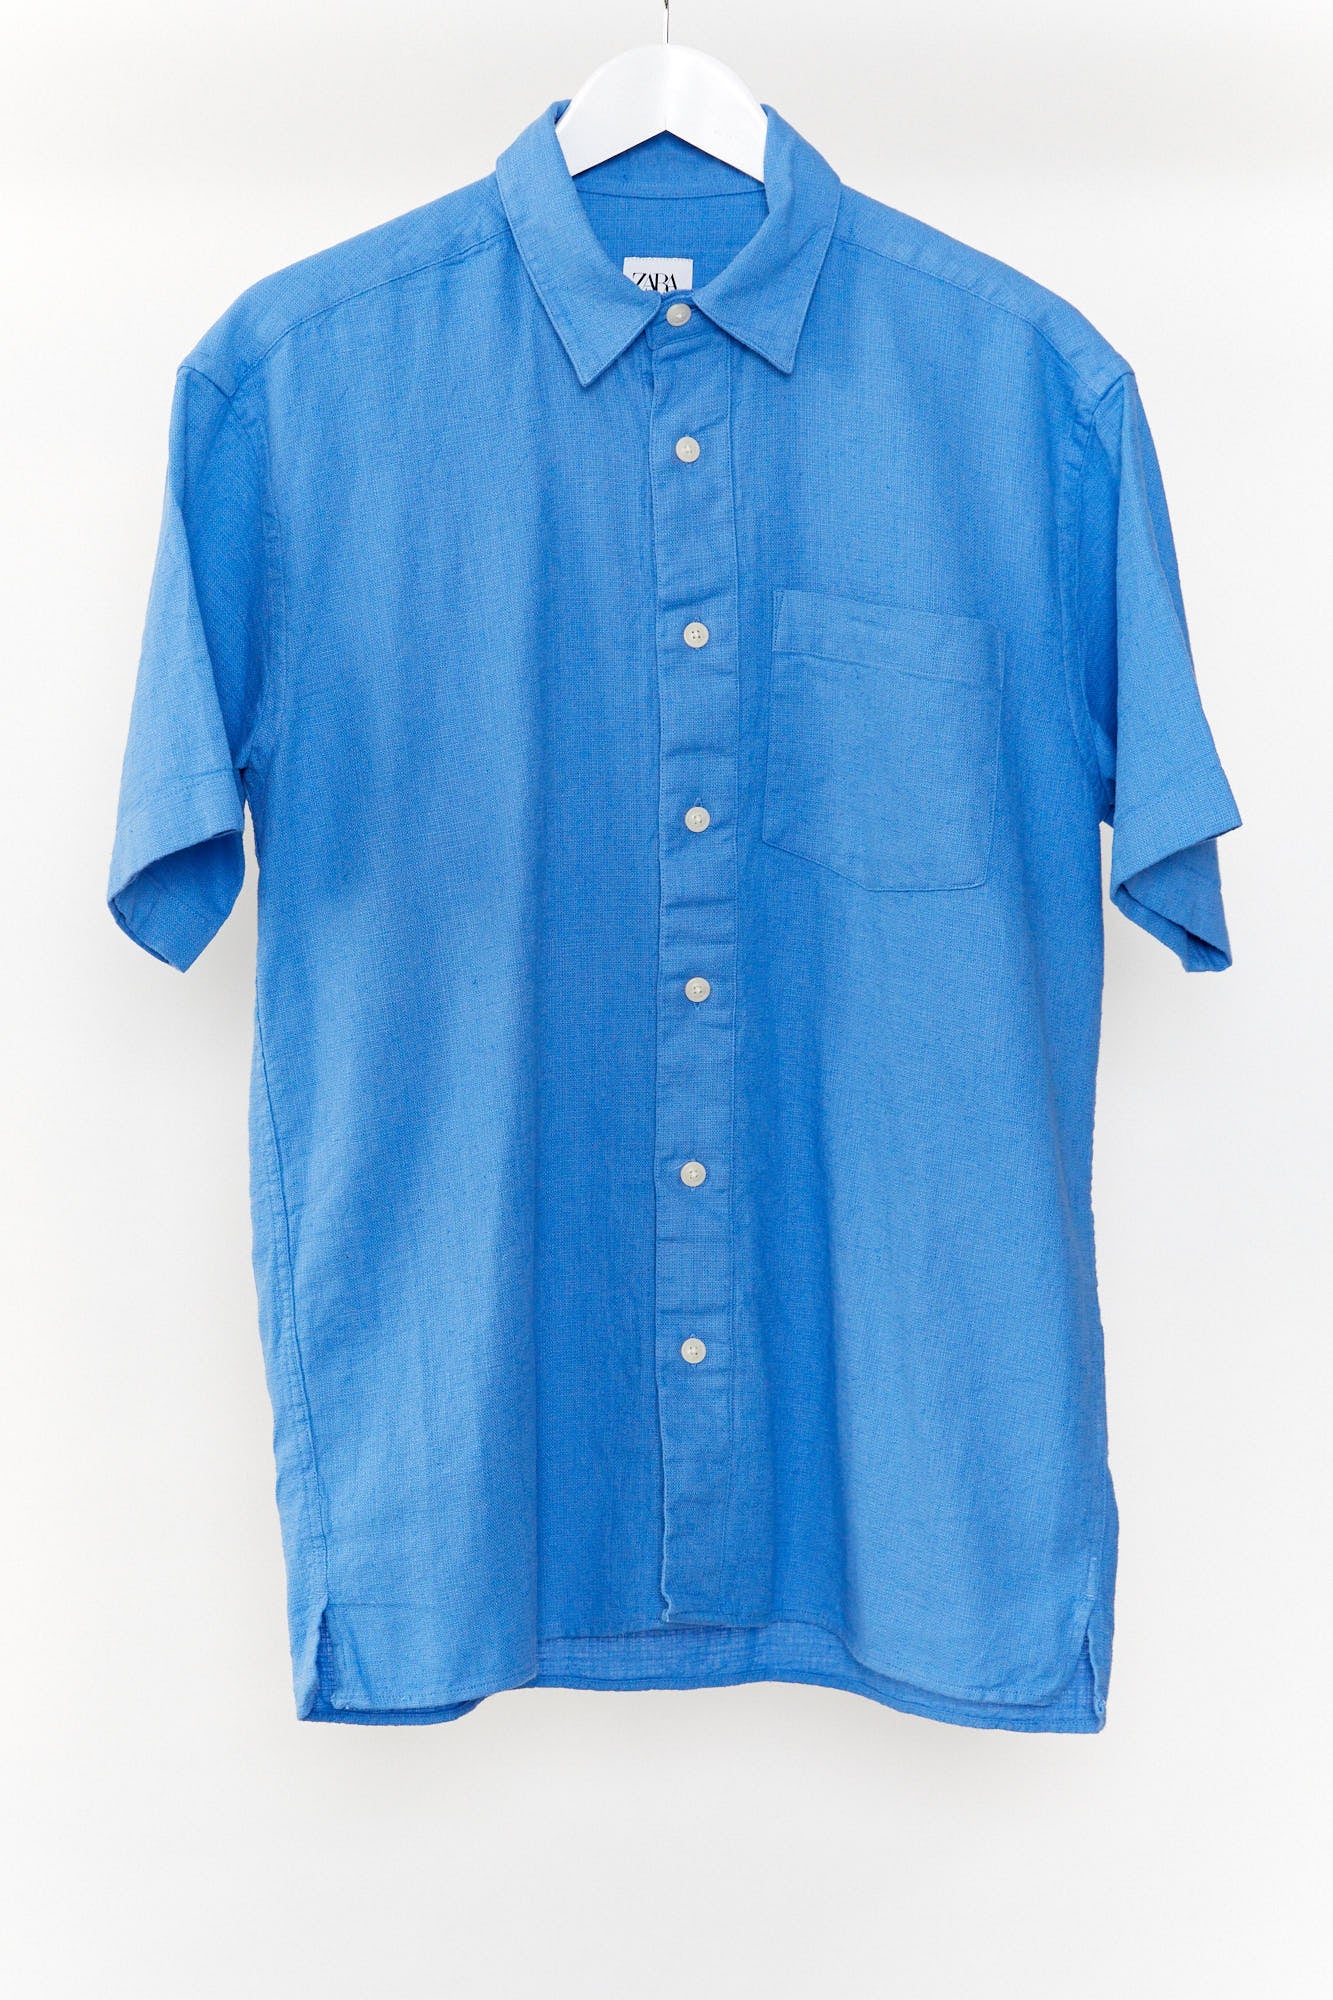 Mens Zara blue short sleeve shirt size medium